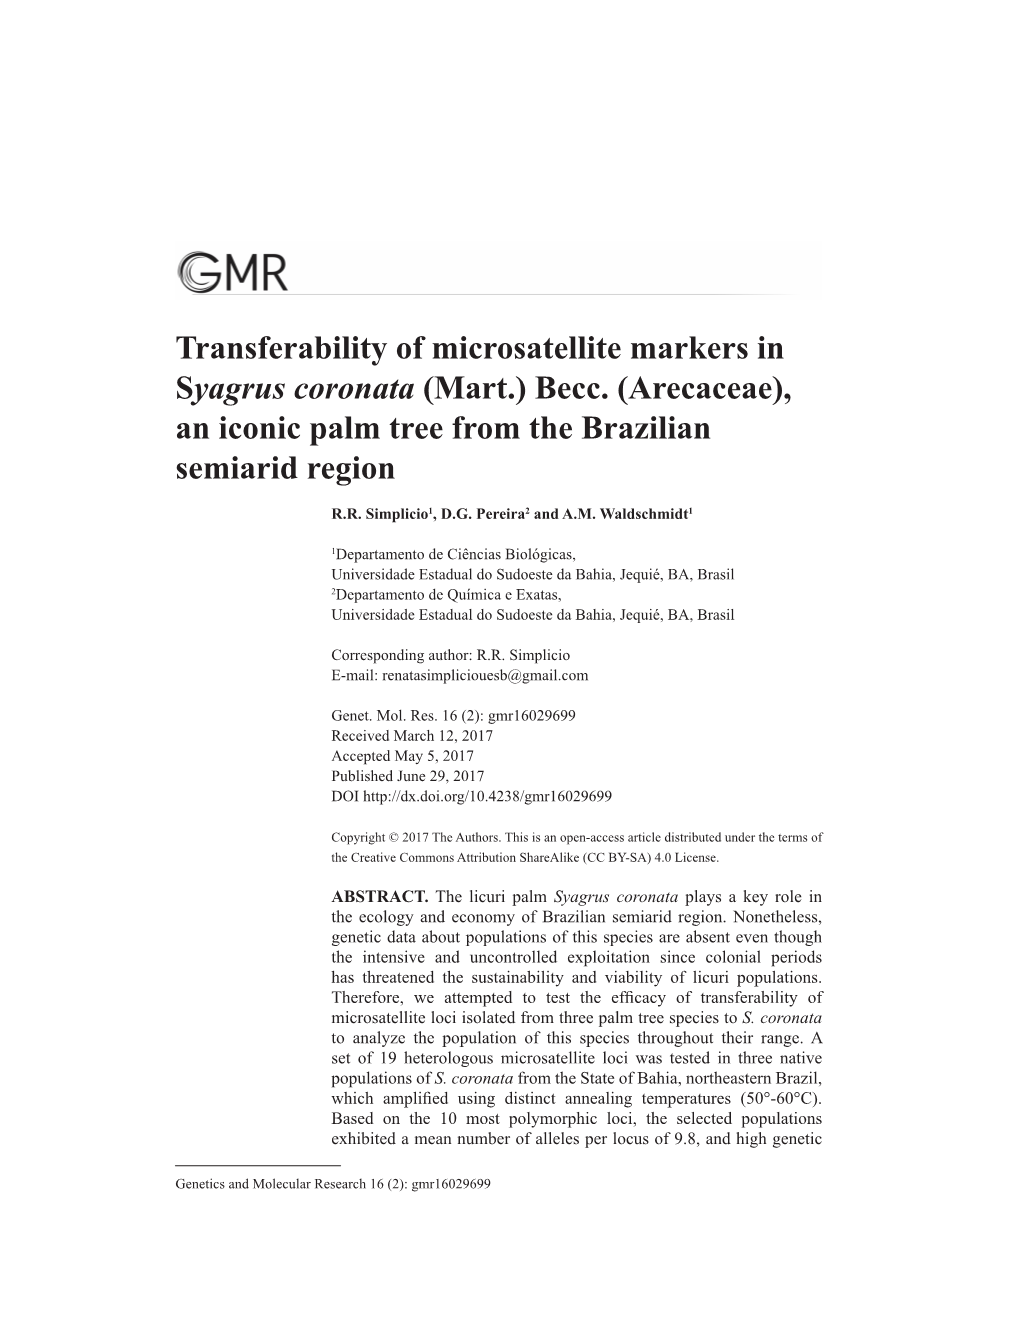 Transferability of Microsatellite Markers in Syagrus Coronata (Mart.) Becc